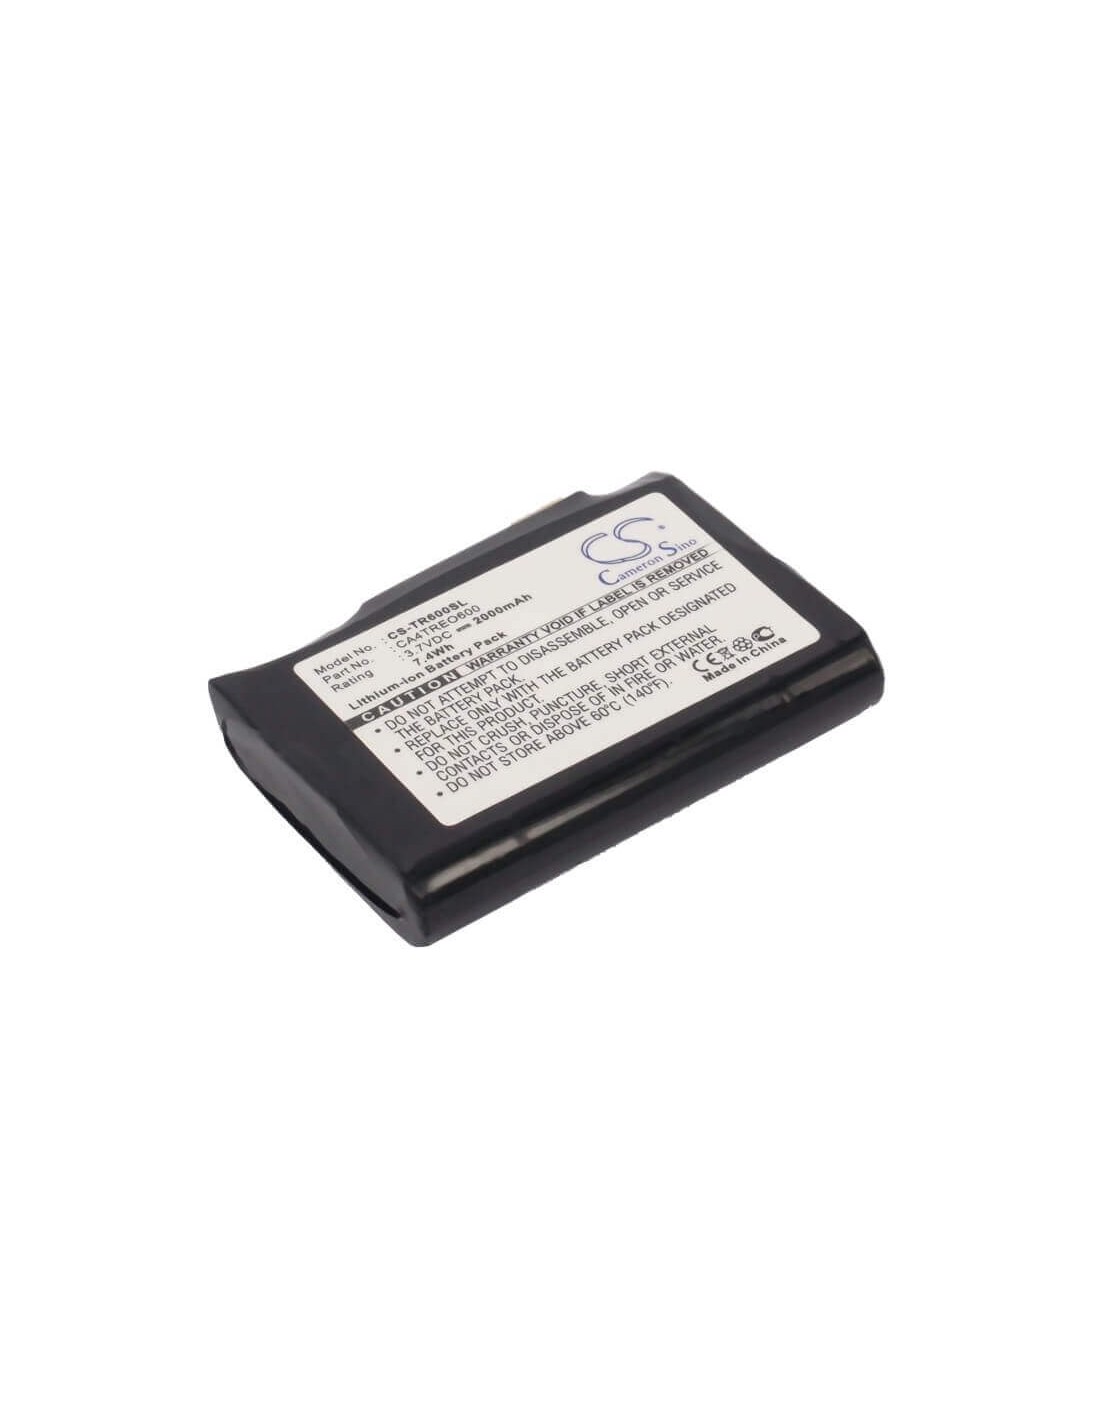 Battery for Palm Treo 600, Treo 610 3.7V, 2000mAh - 7.40Wh